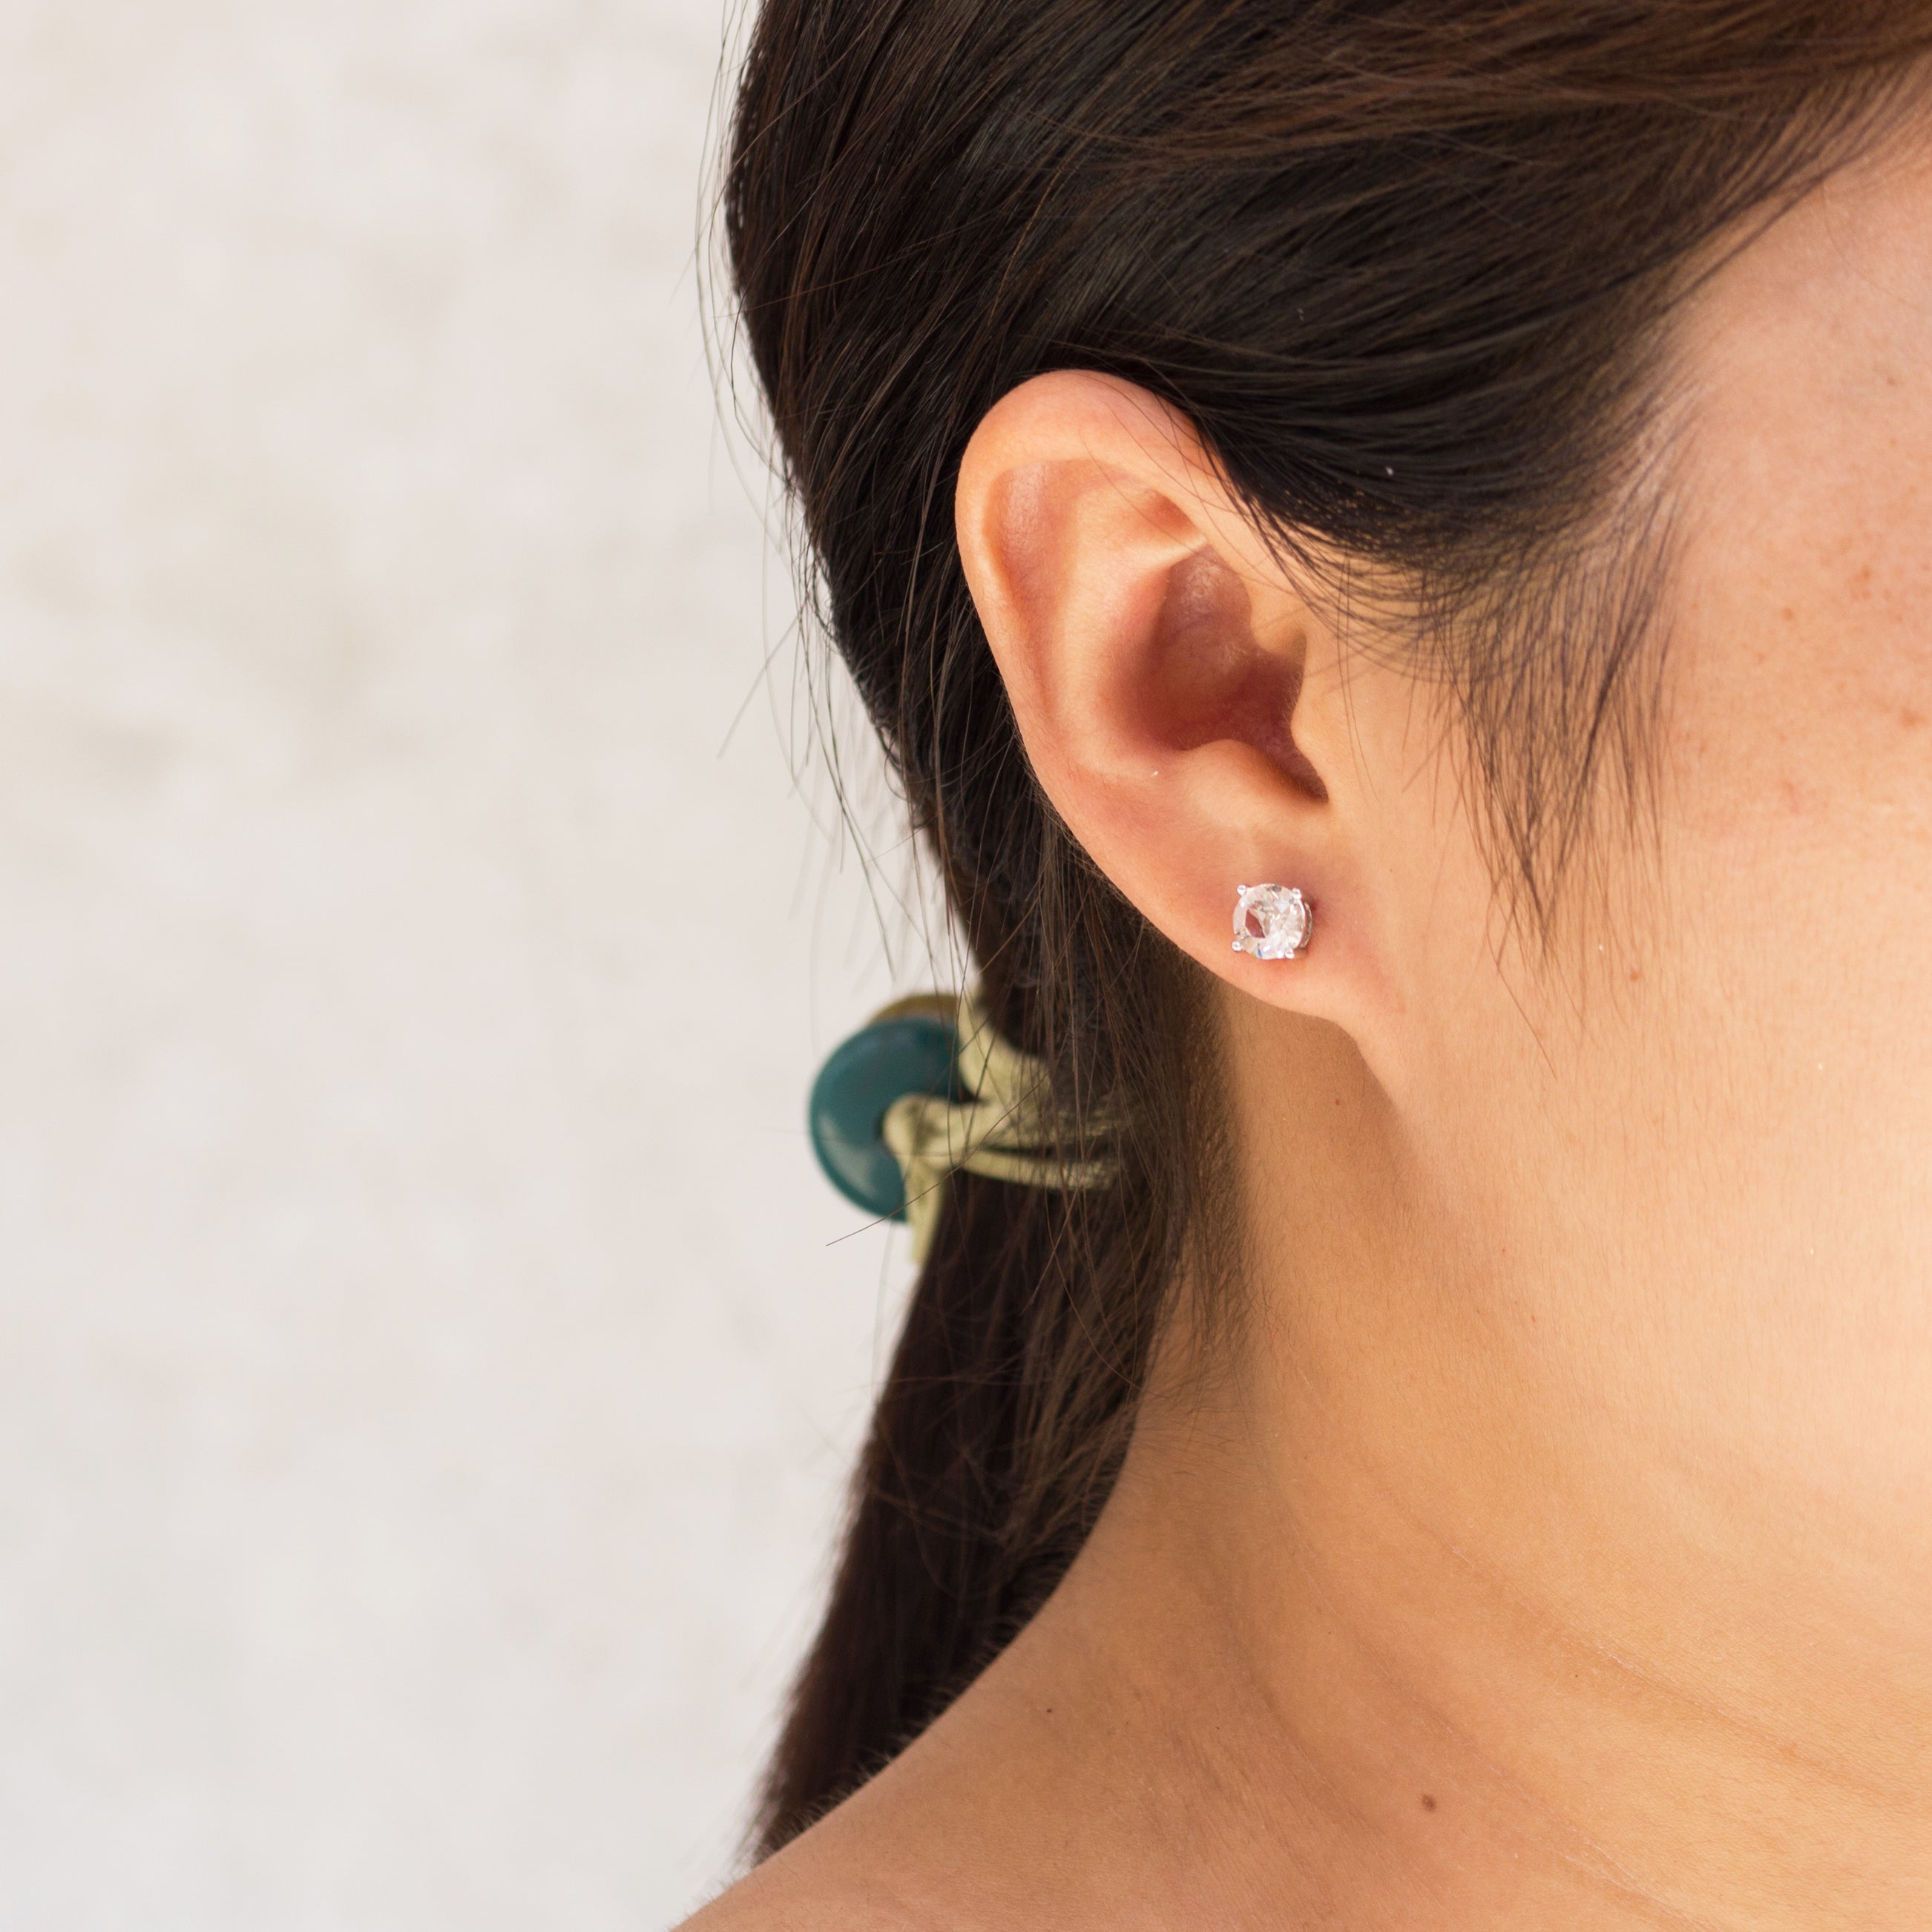 April (Diamond) Birthstone Earrings Created with Zircondia® Crystals